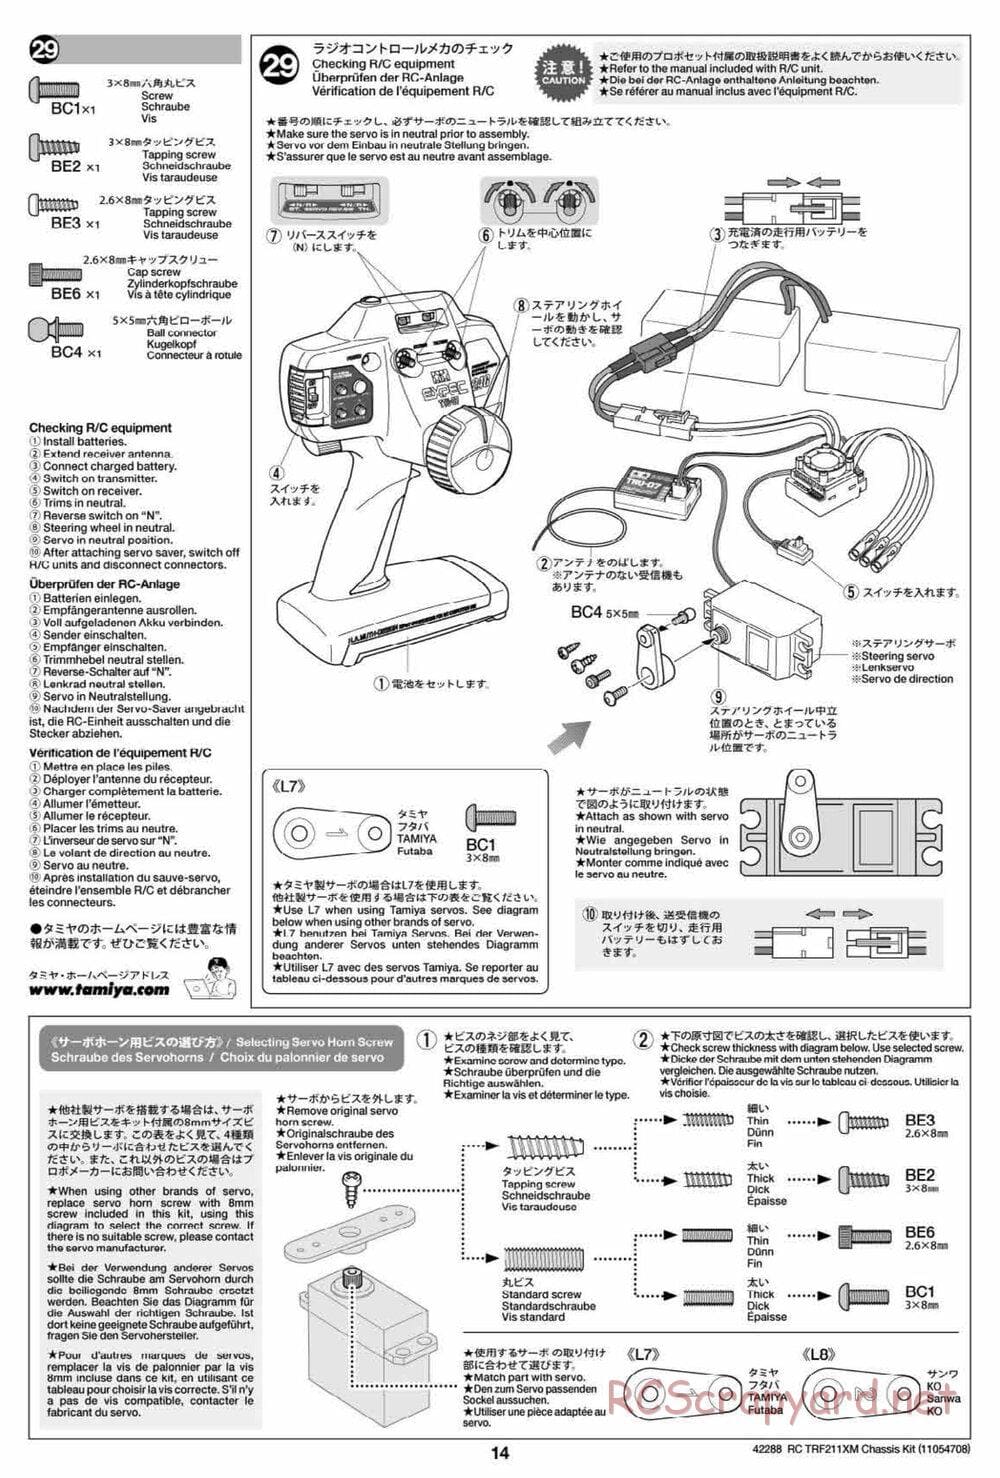 Tamiya - TRF211XM Chassis - Manual - Page 14